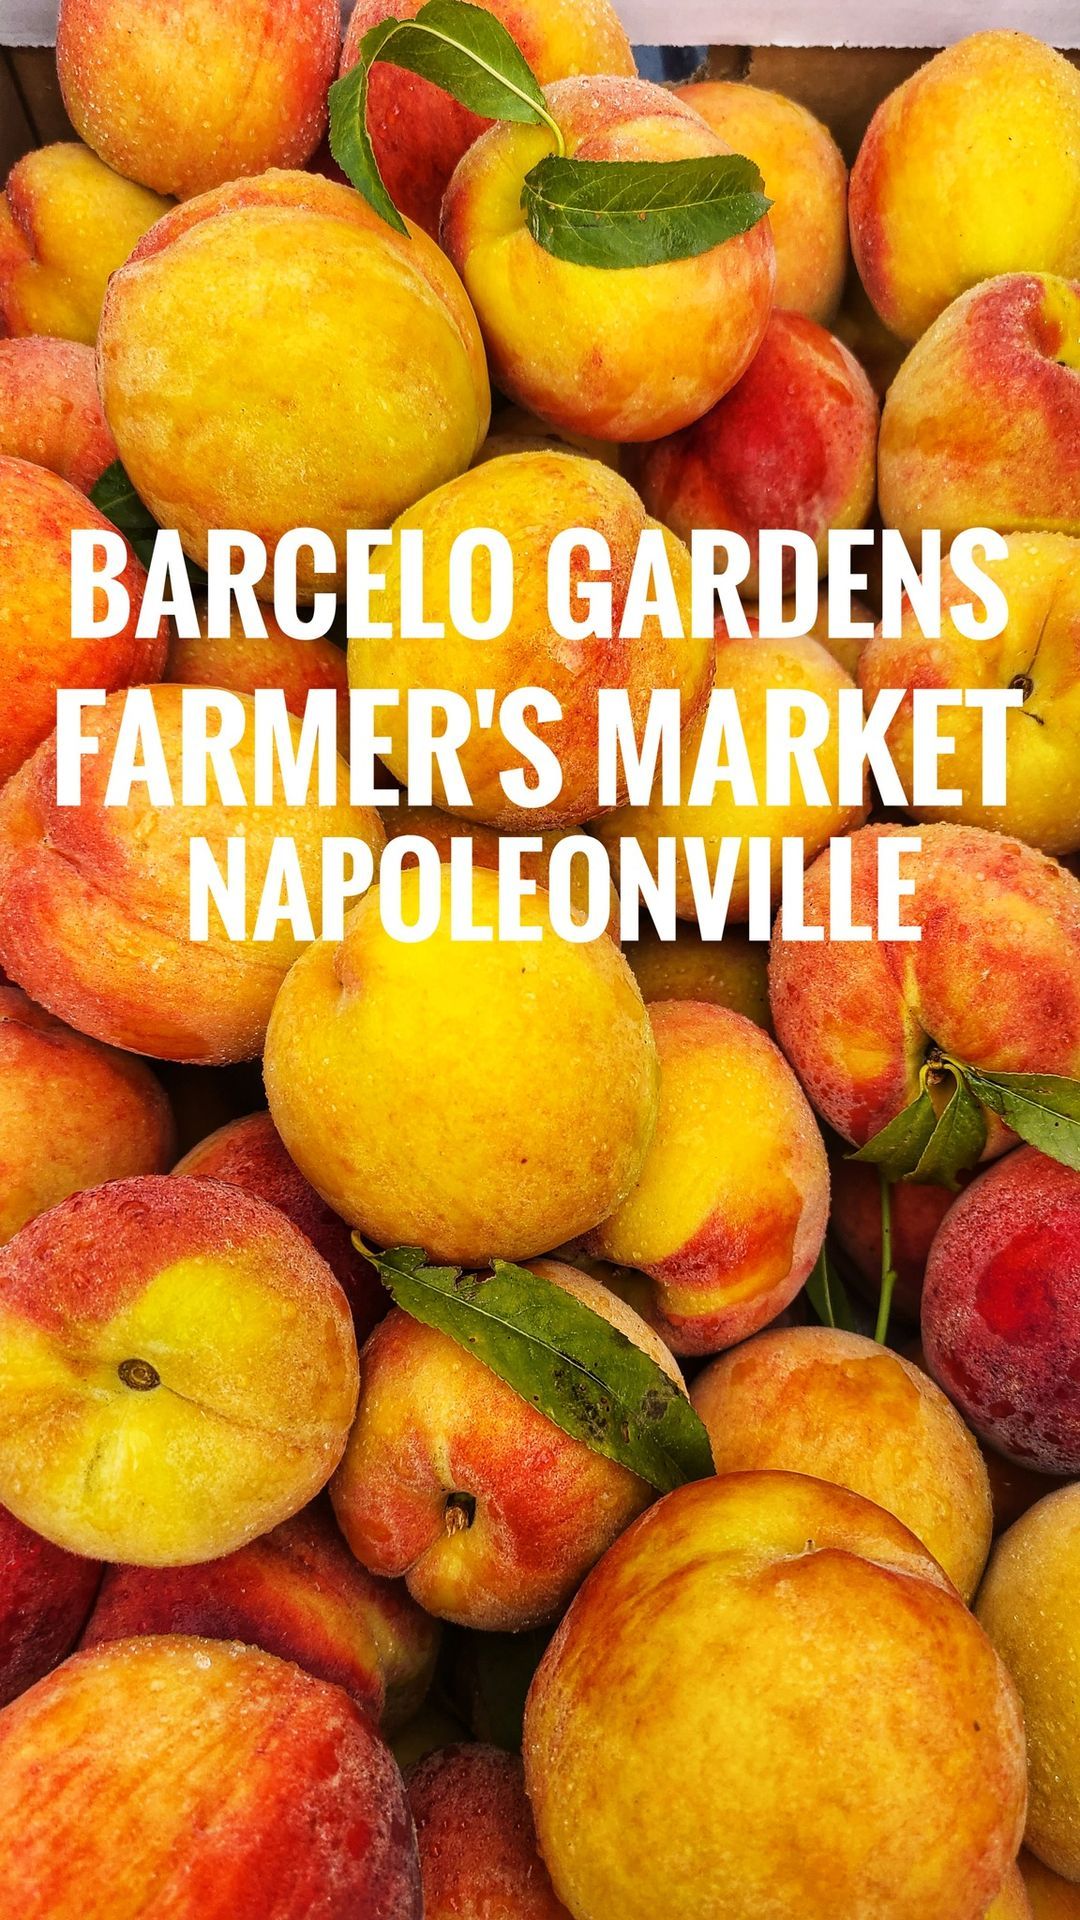 Farmer's Market in Napoleonville by Barcelo Gardens 